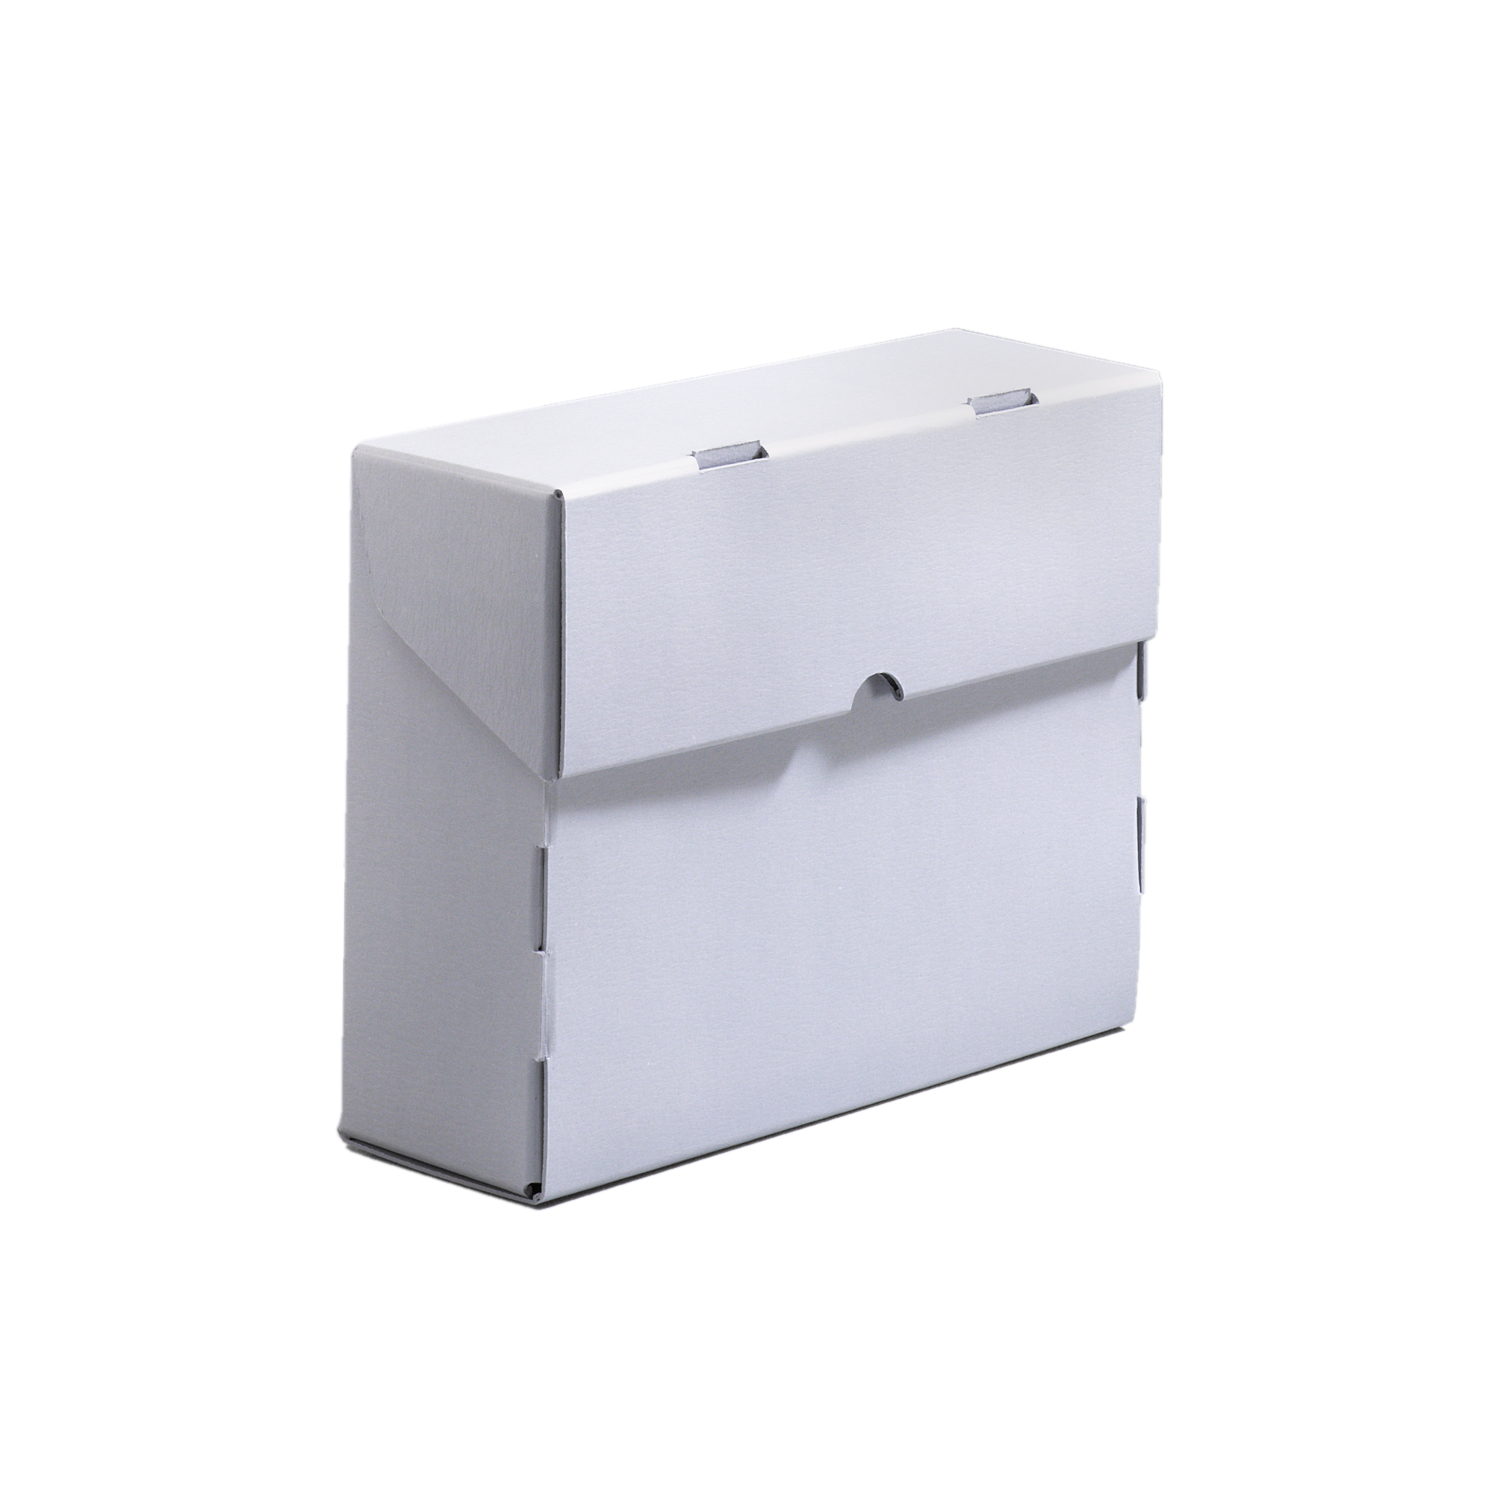 Storage box "Scala" - DIN A4 Premium